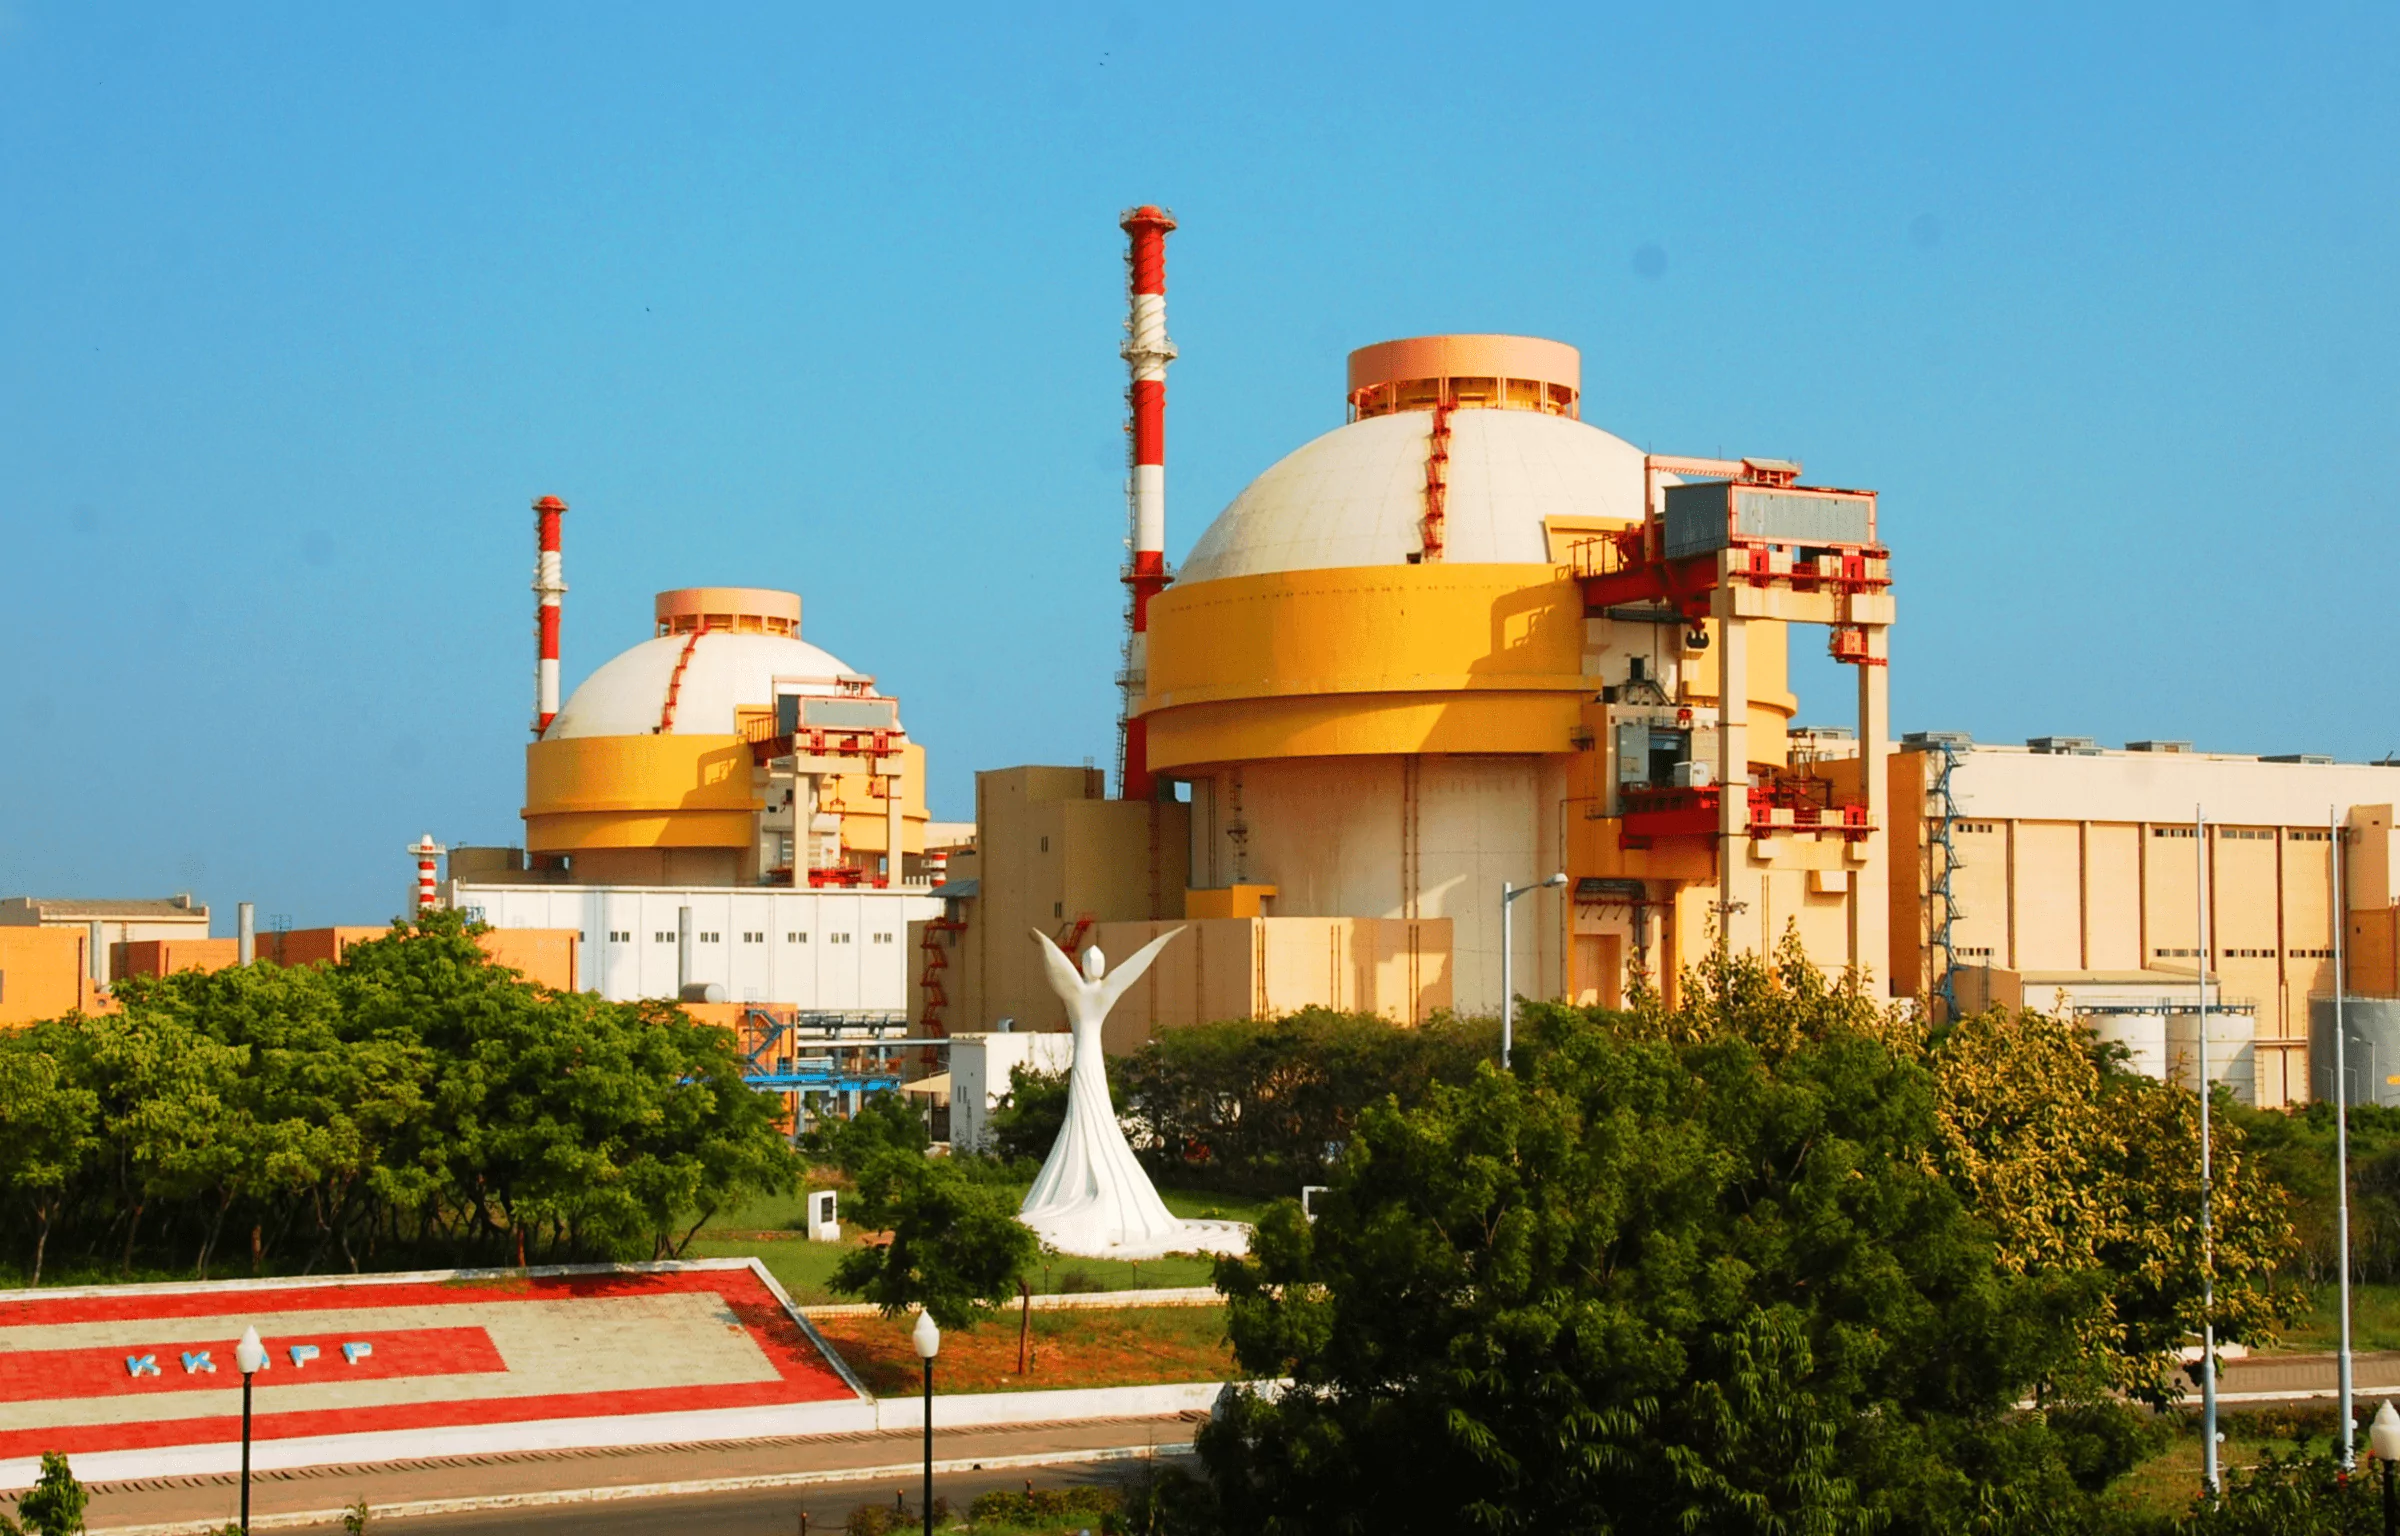 Kudankulam Nuclear Power Plant
